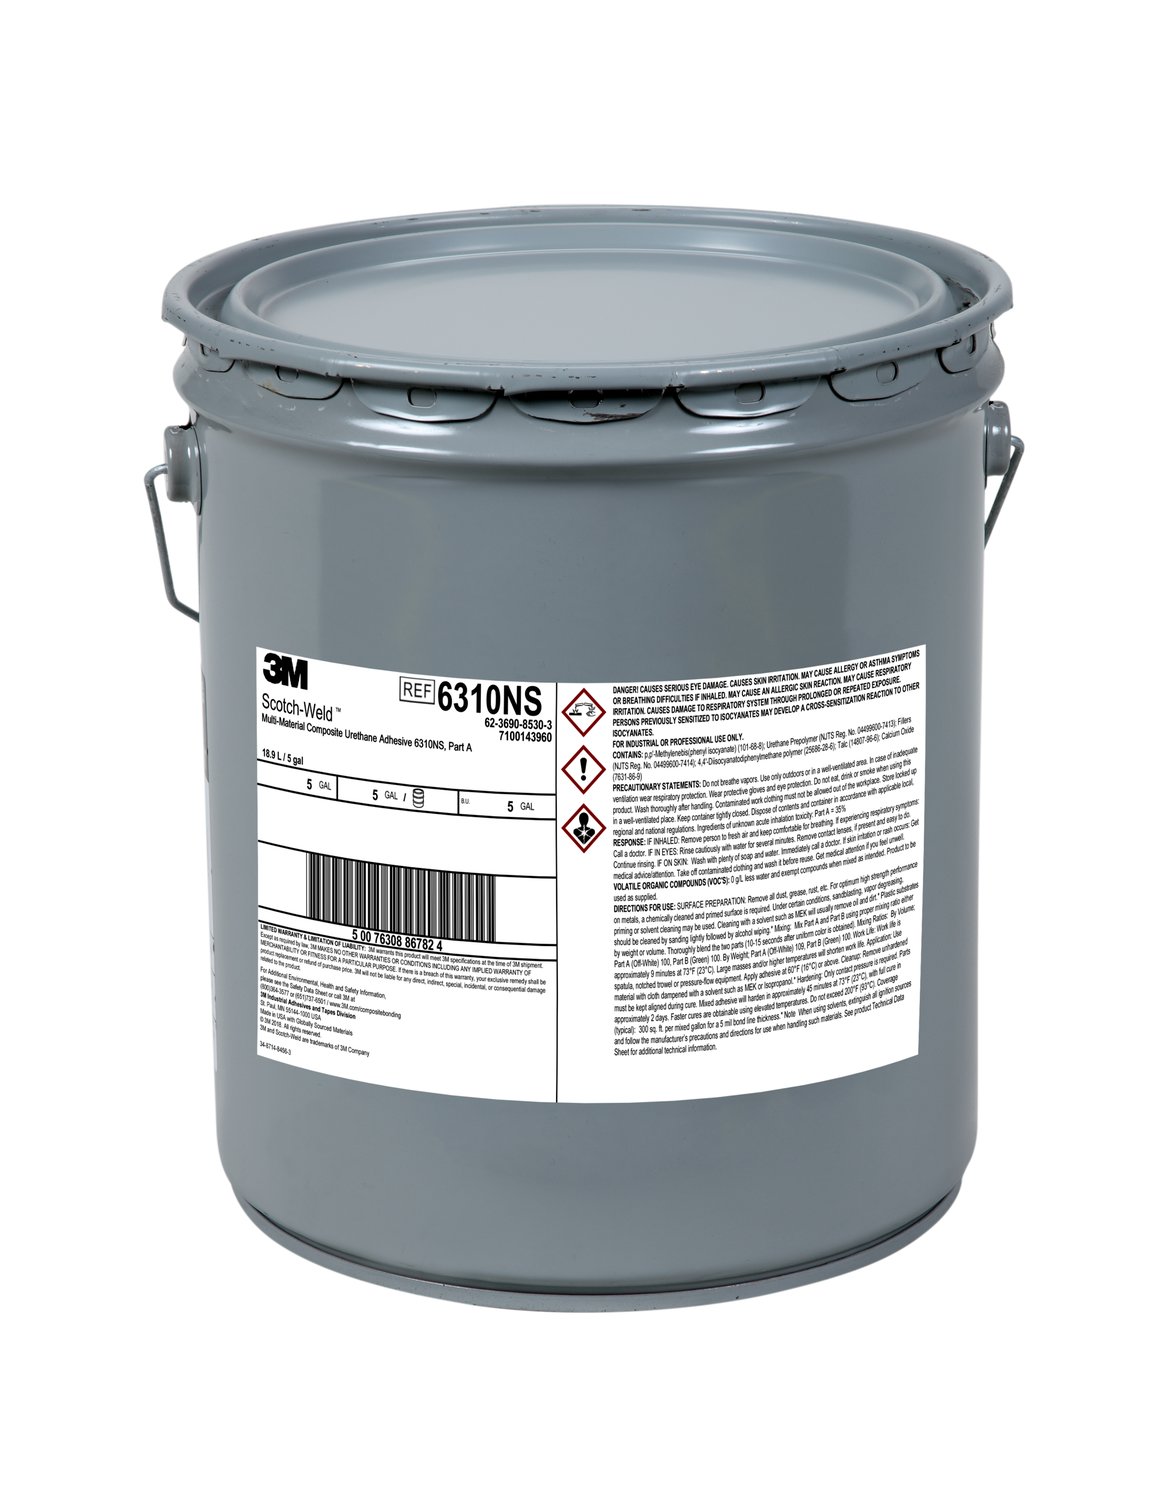 7100143960 - 3M Scotch-Weld Multi-Material Composite Urethane Adhesive 6310NS,
Green, Part A, 5 Gallon (Pail), Drum